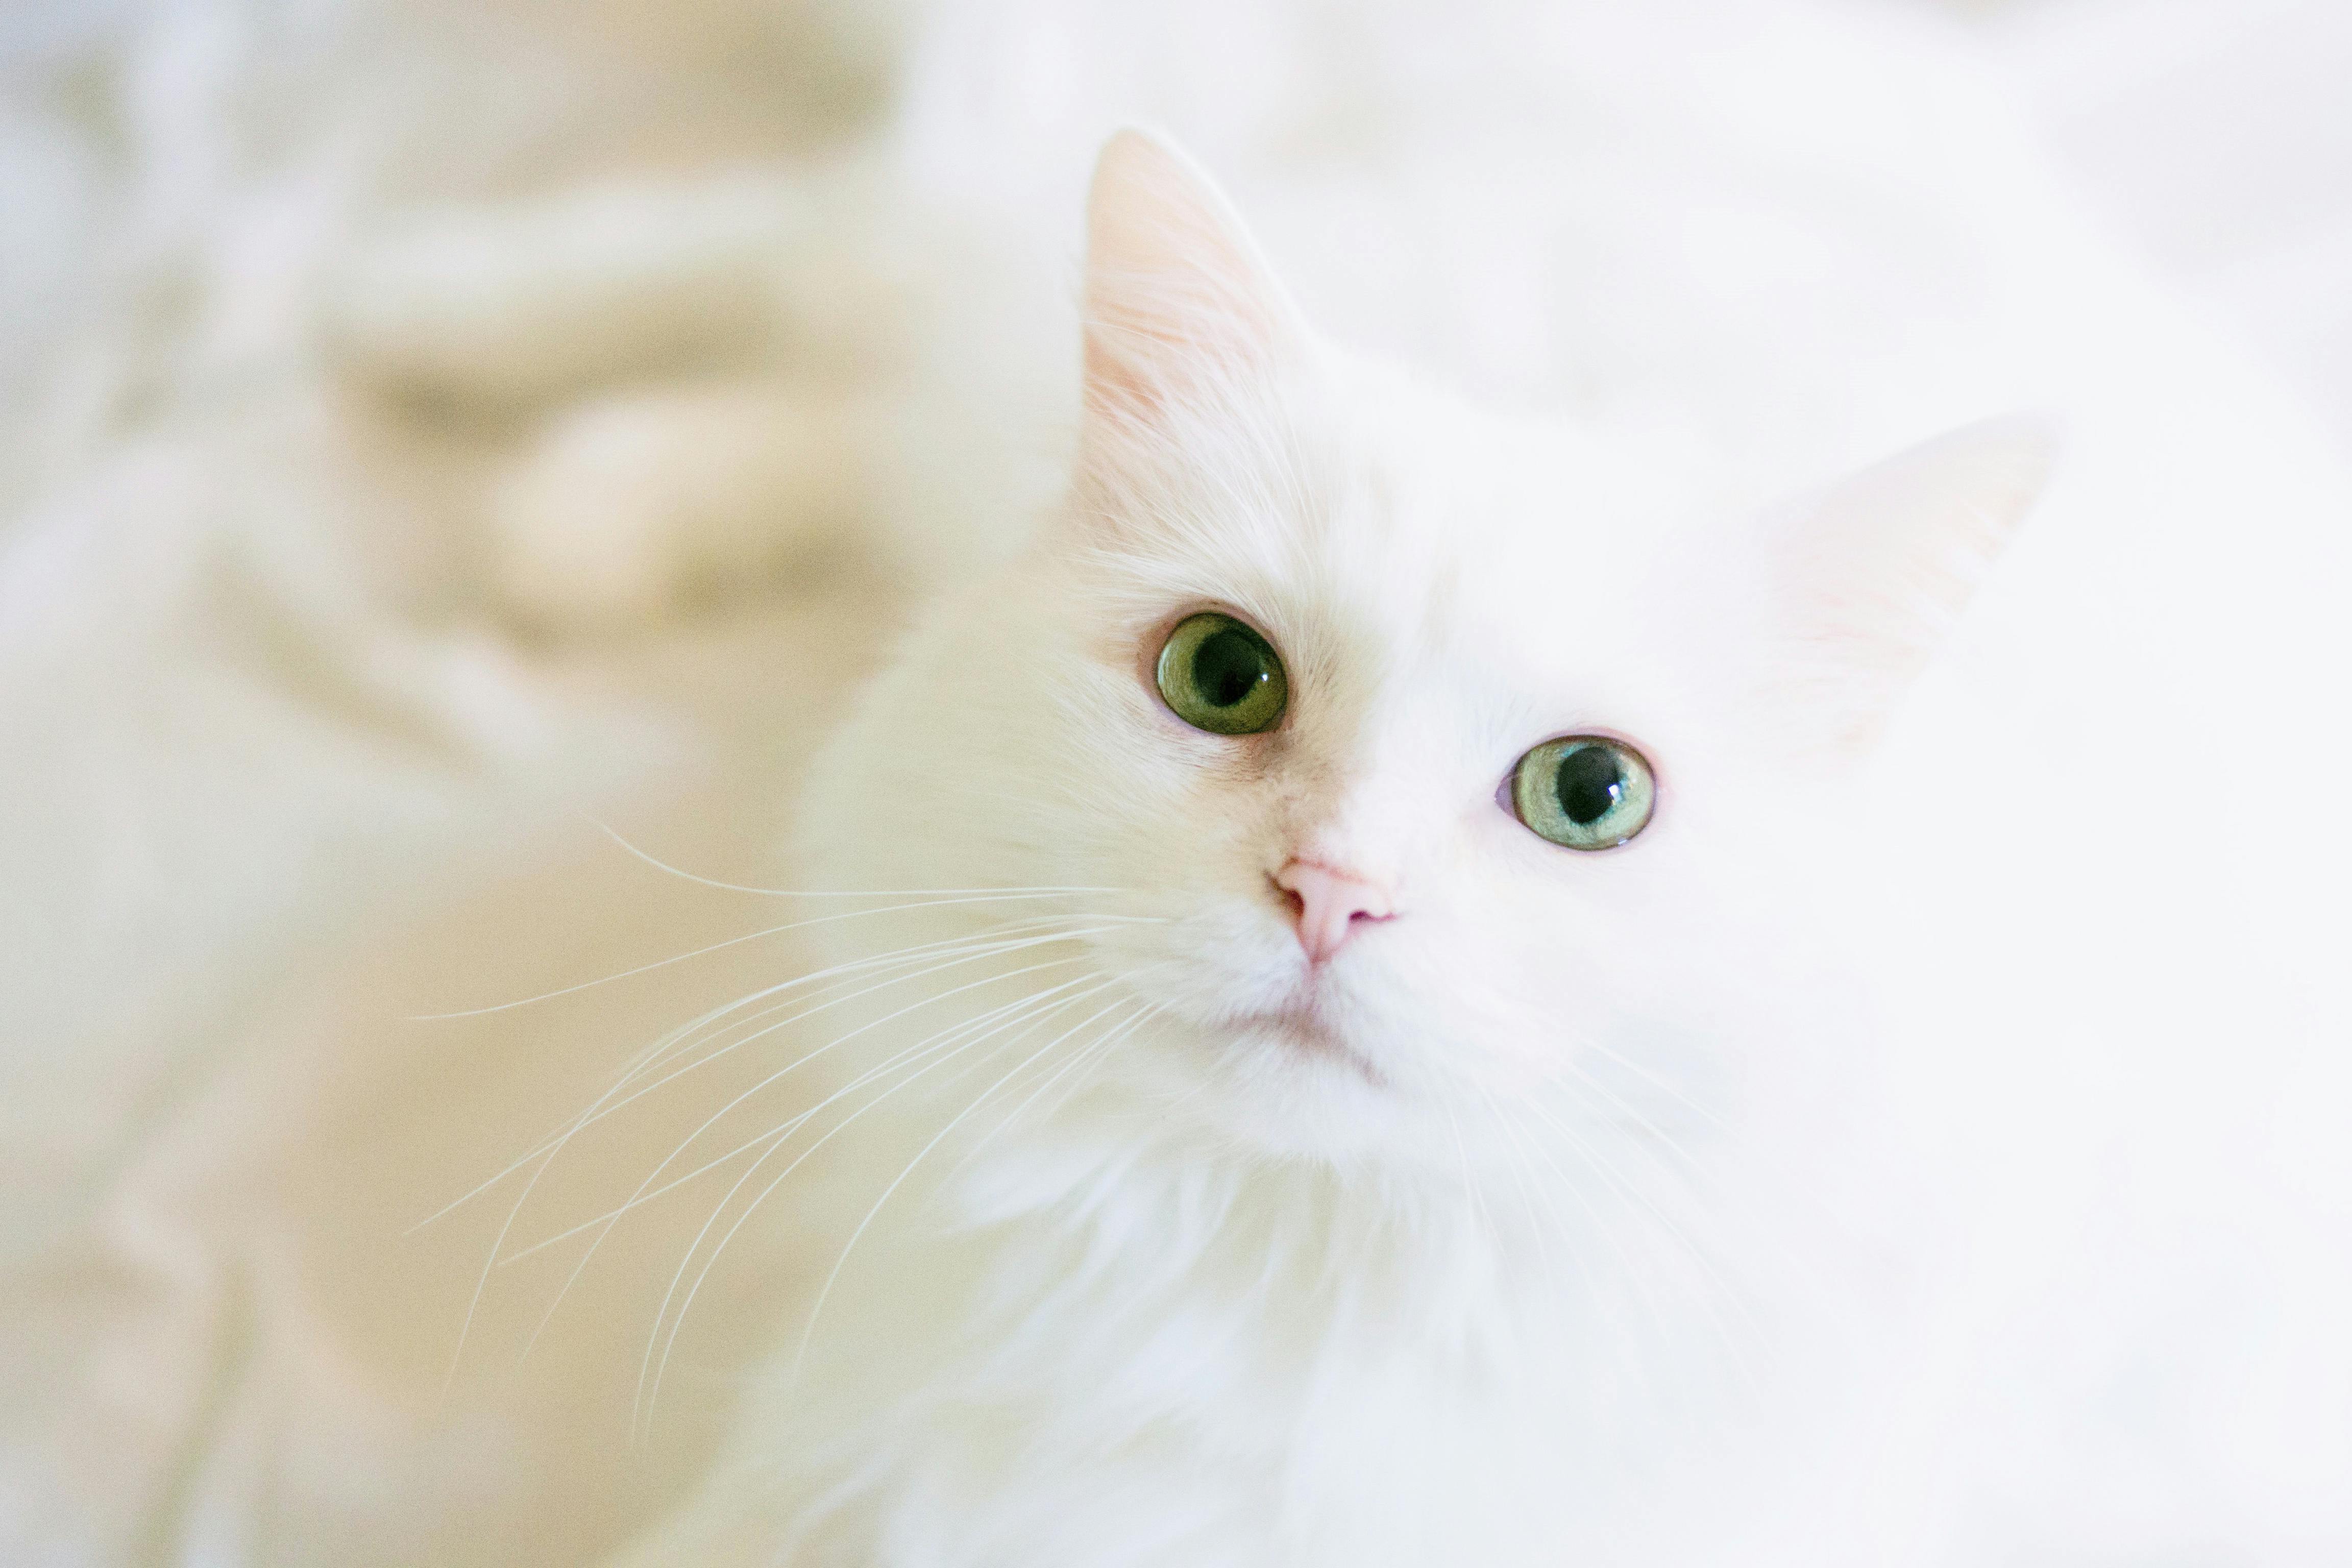 cat white background